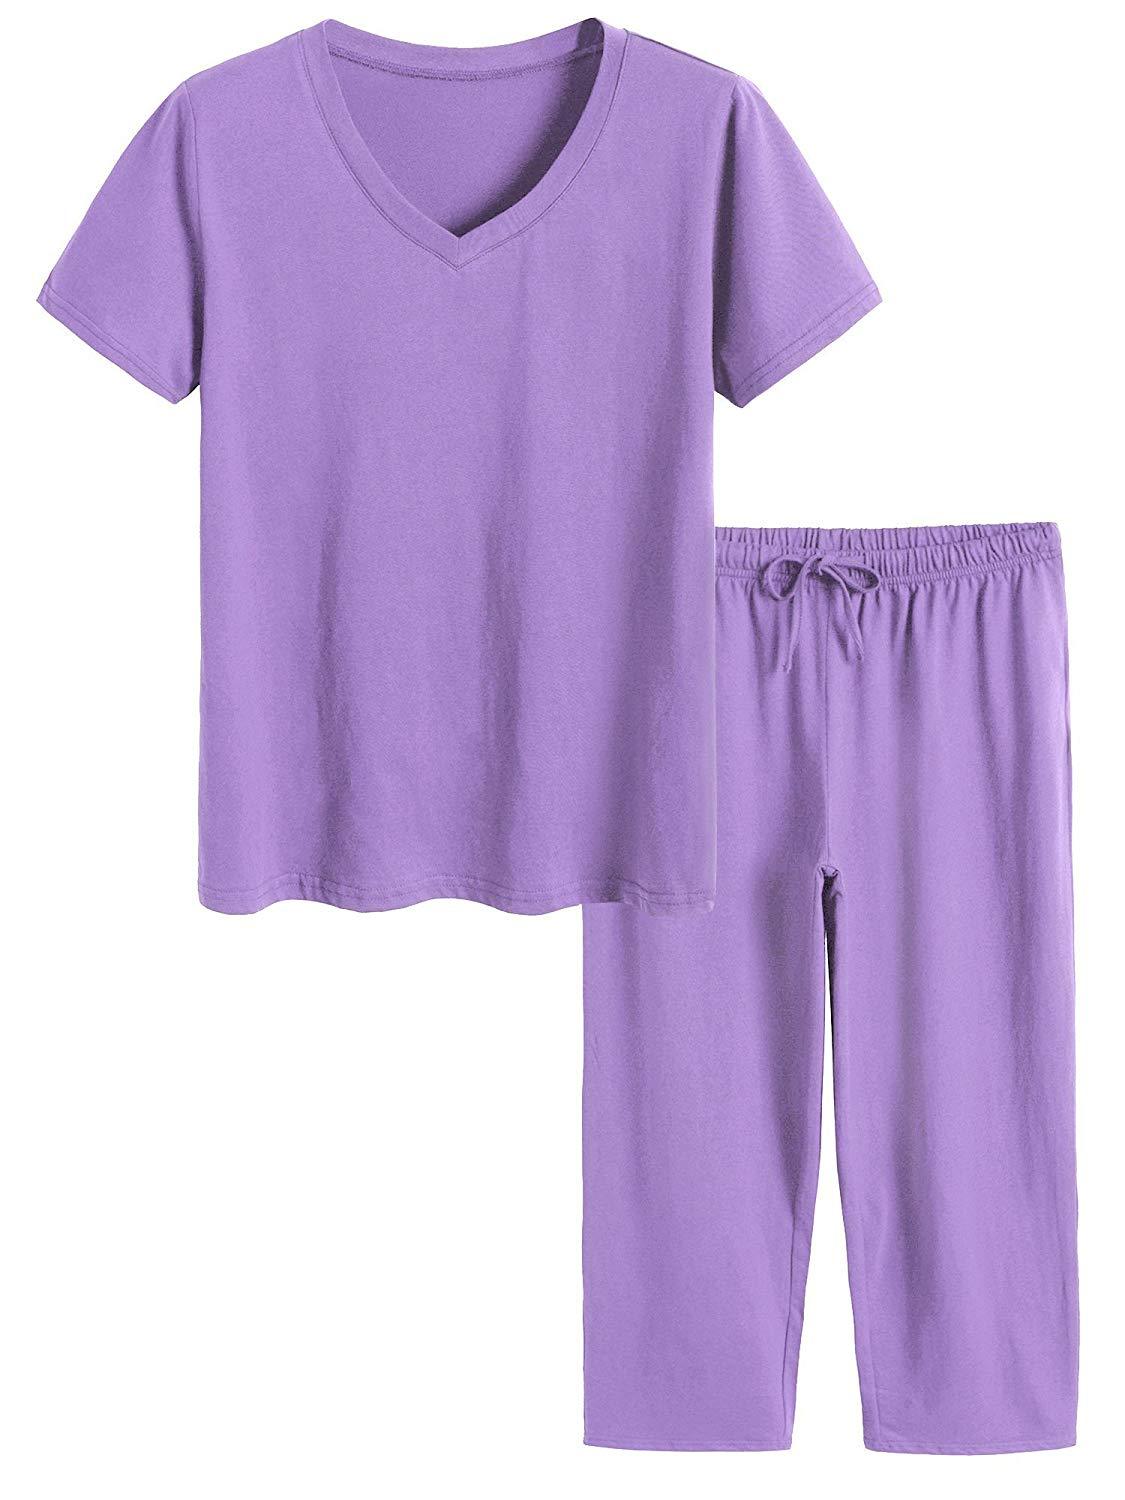 Women's Cotton Pajamas Set Tops and Capri Pants Sleepwear - Latuza